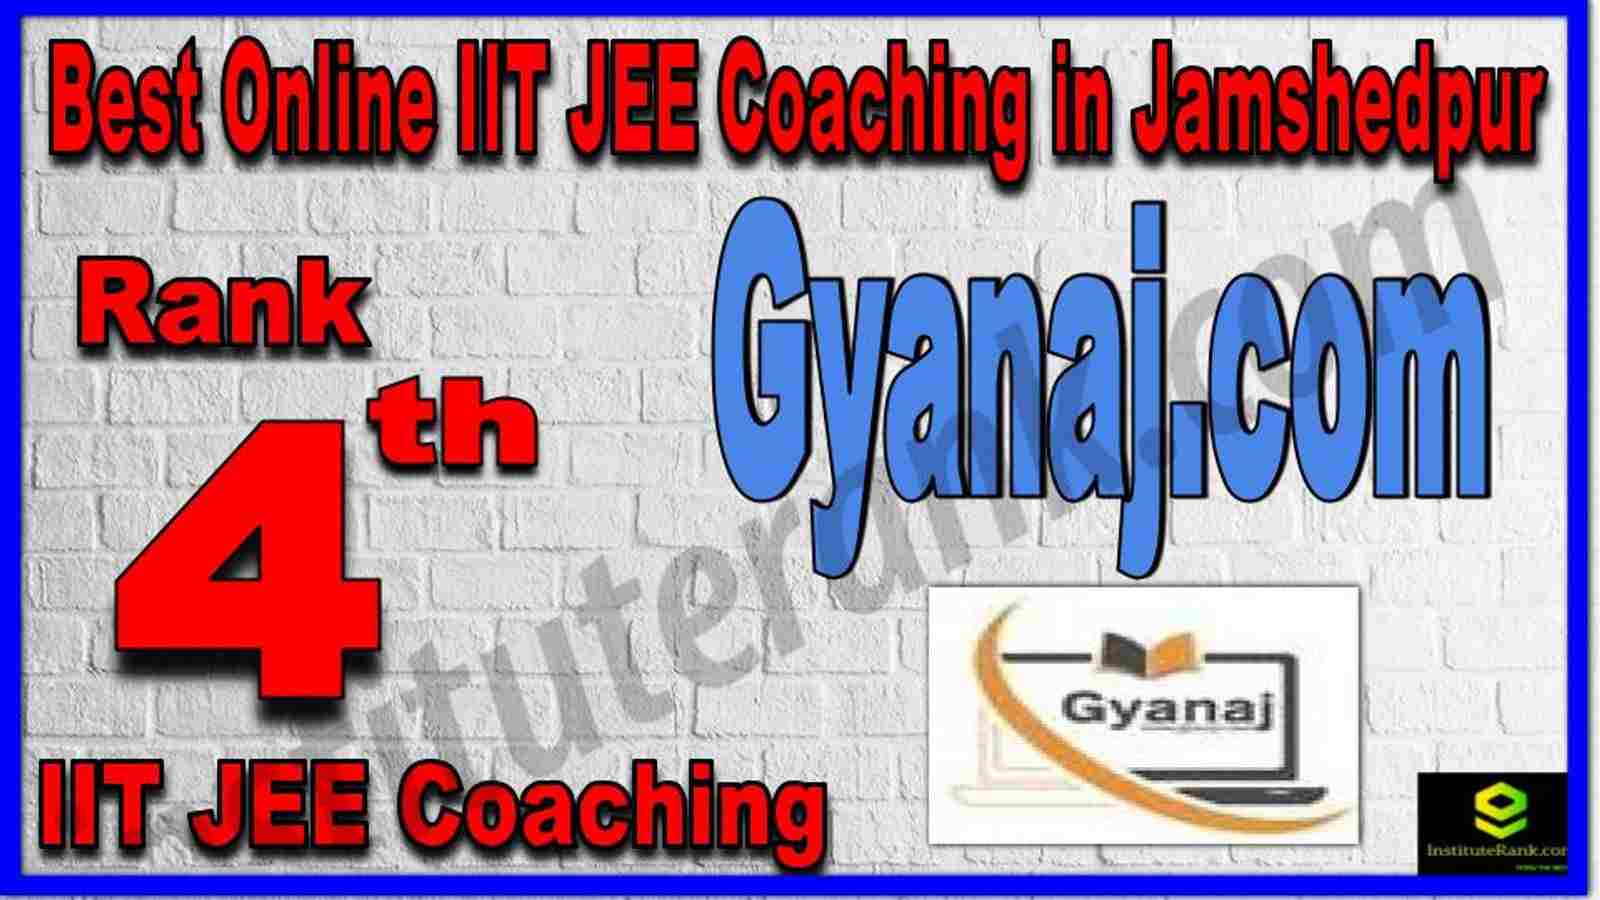 Rank 4th Best Online IIT JEE Coaching in Jamshedpur